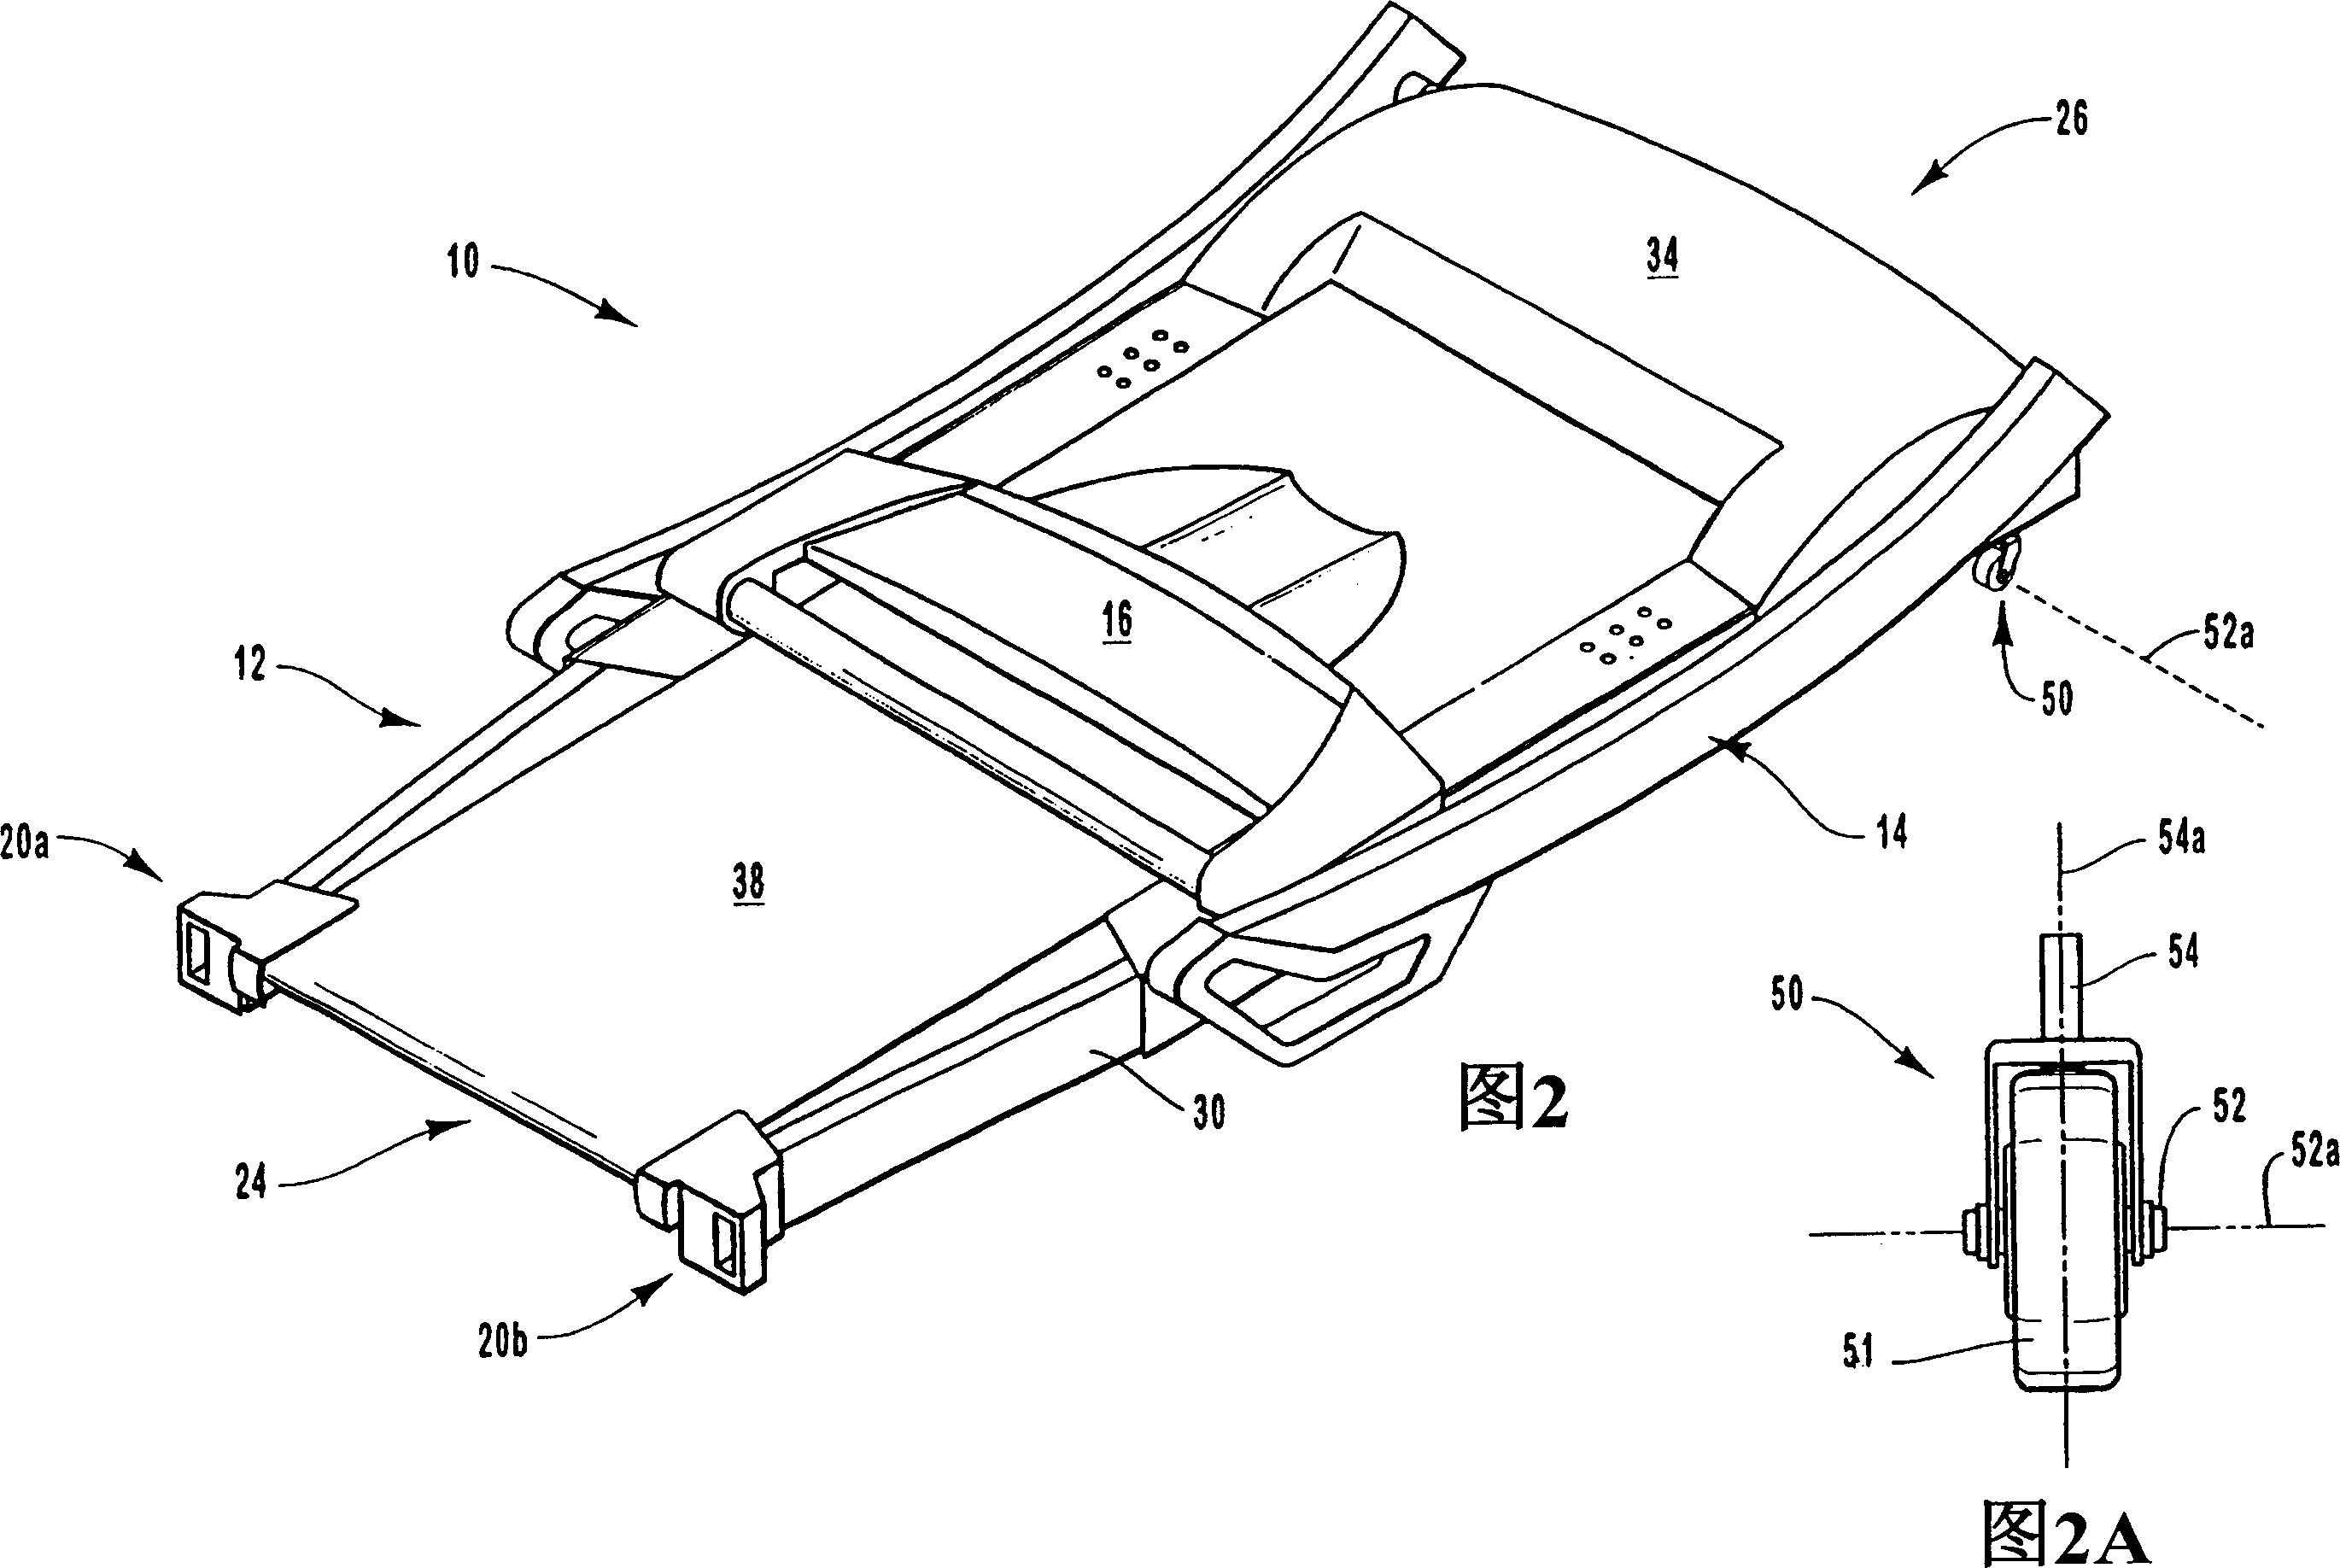 Low-profile folding, motorized treadmill